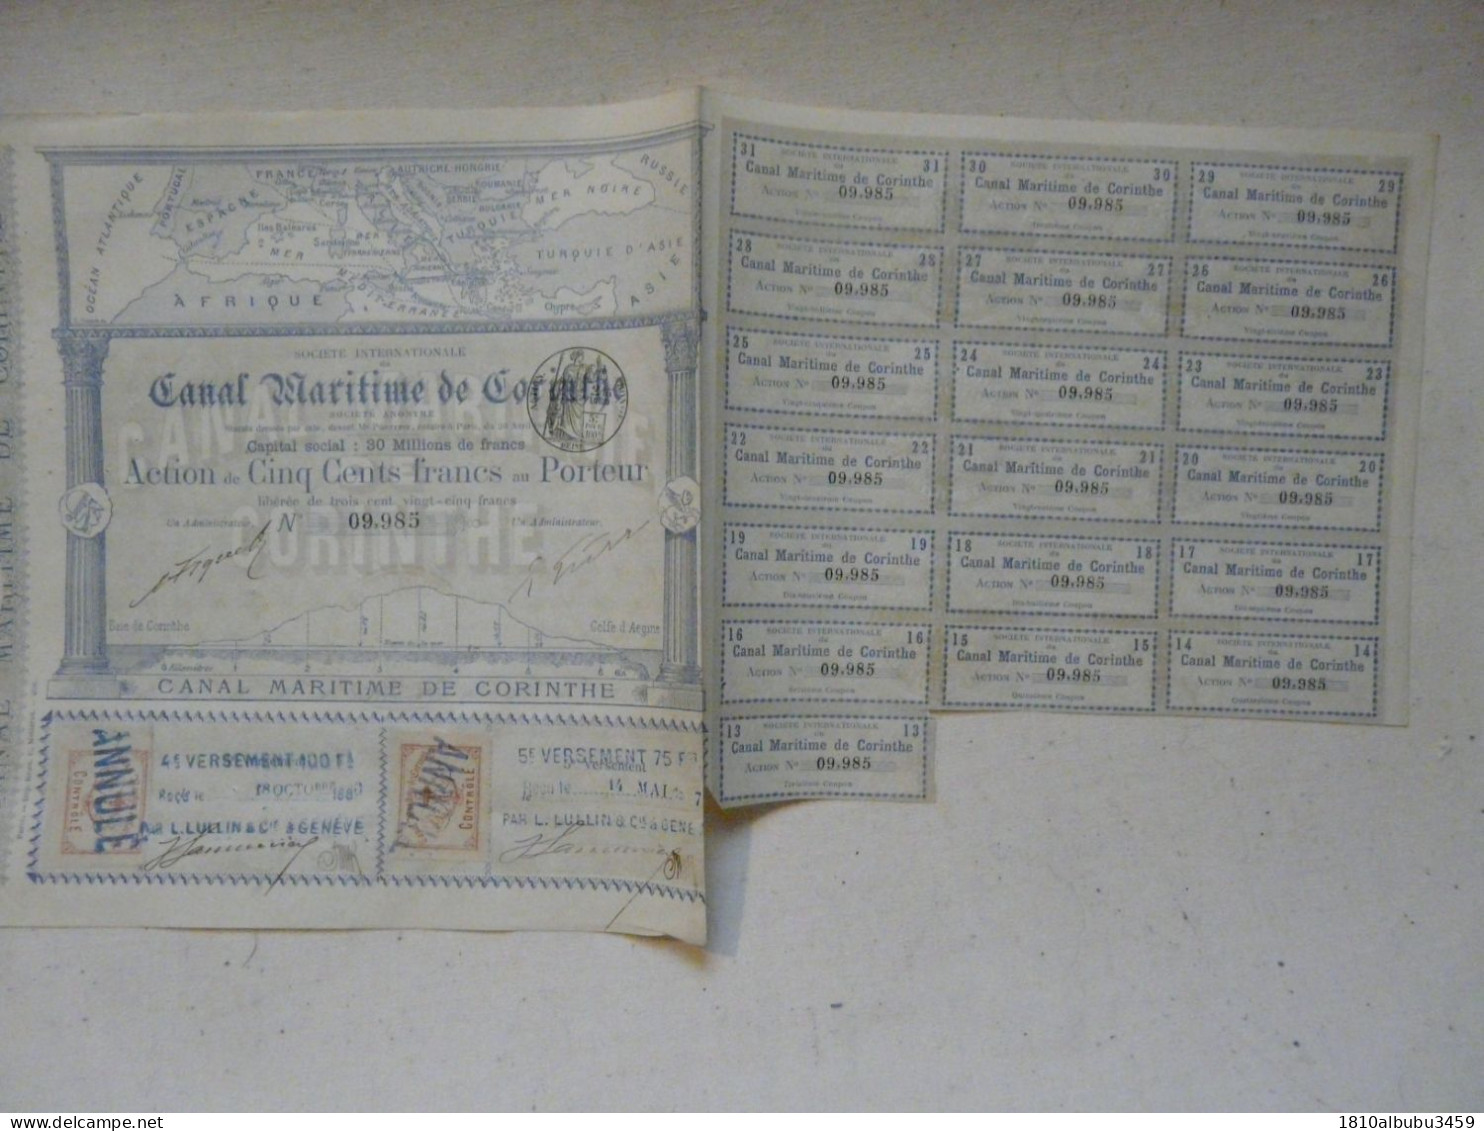 RARE - ACTION DE CINQ CENTS FRANCS - SOCIETE INTERNATIONALE DU CANAL MARITIME DE CORINTHE 1886-1887 - Navegación